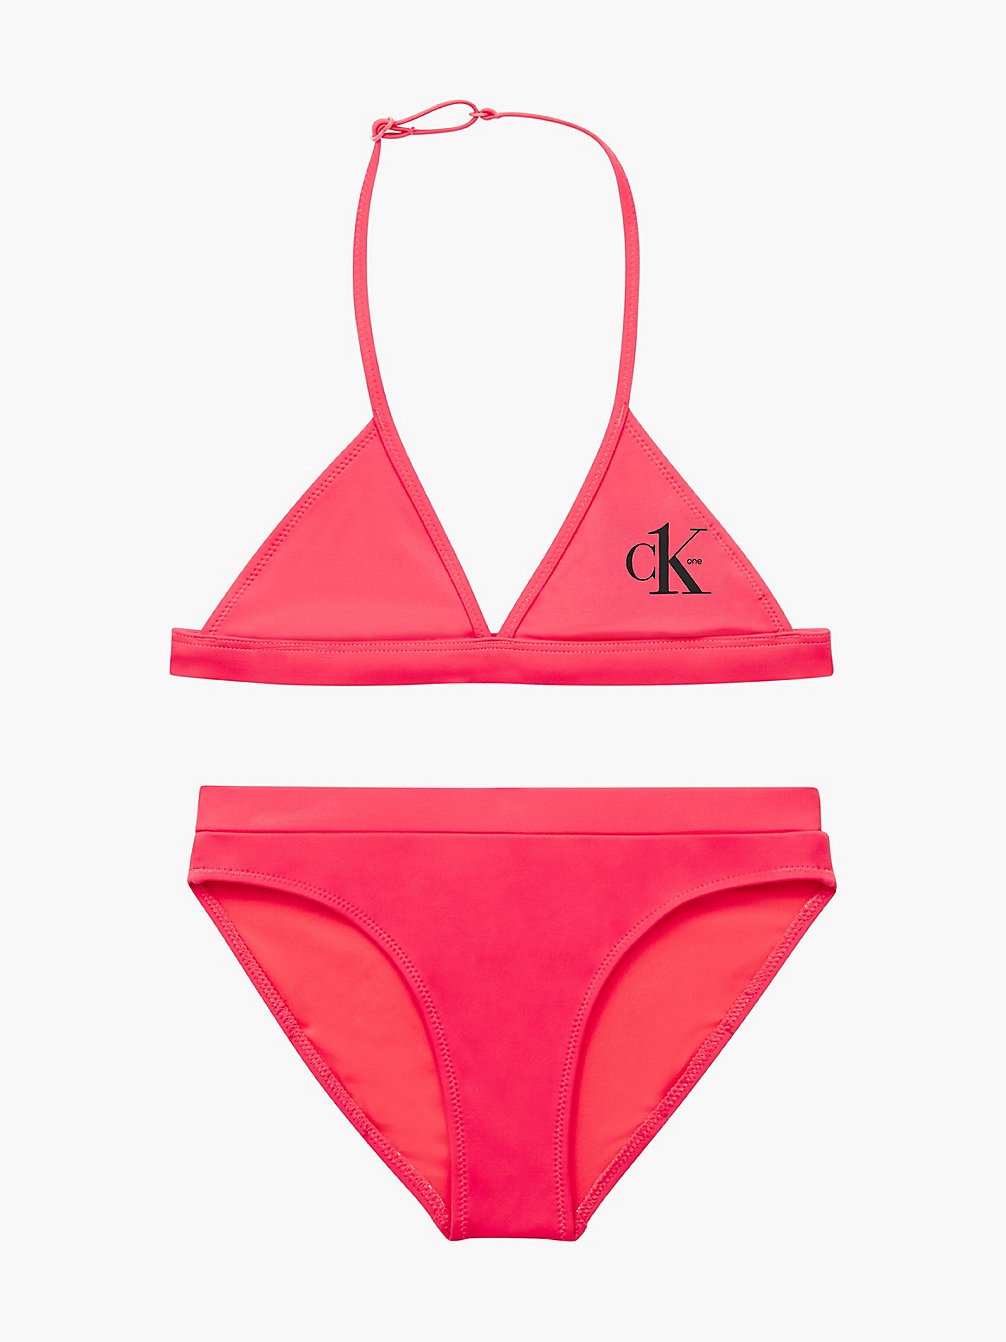 CORAL CRUSH Girls Triangle Bikini Set - CK One undefined girls Calvin Klein